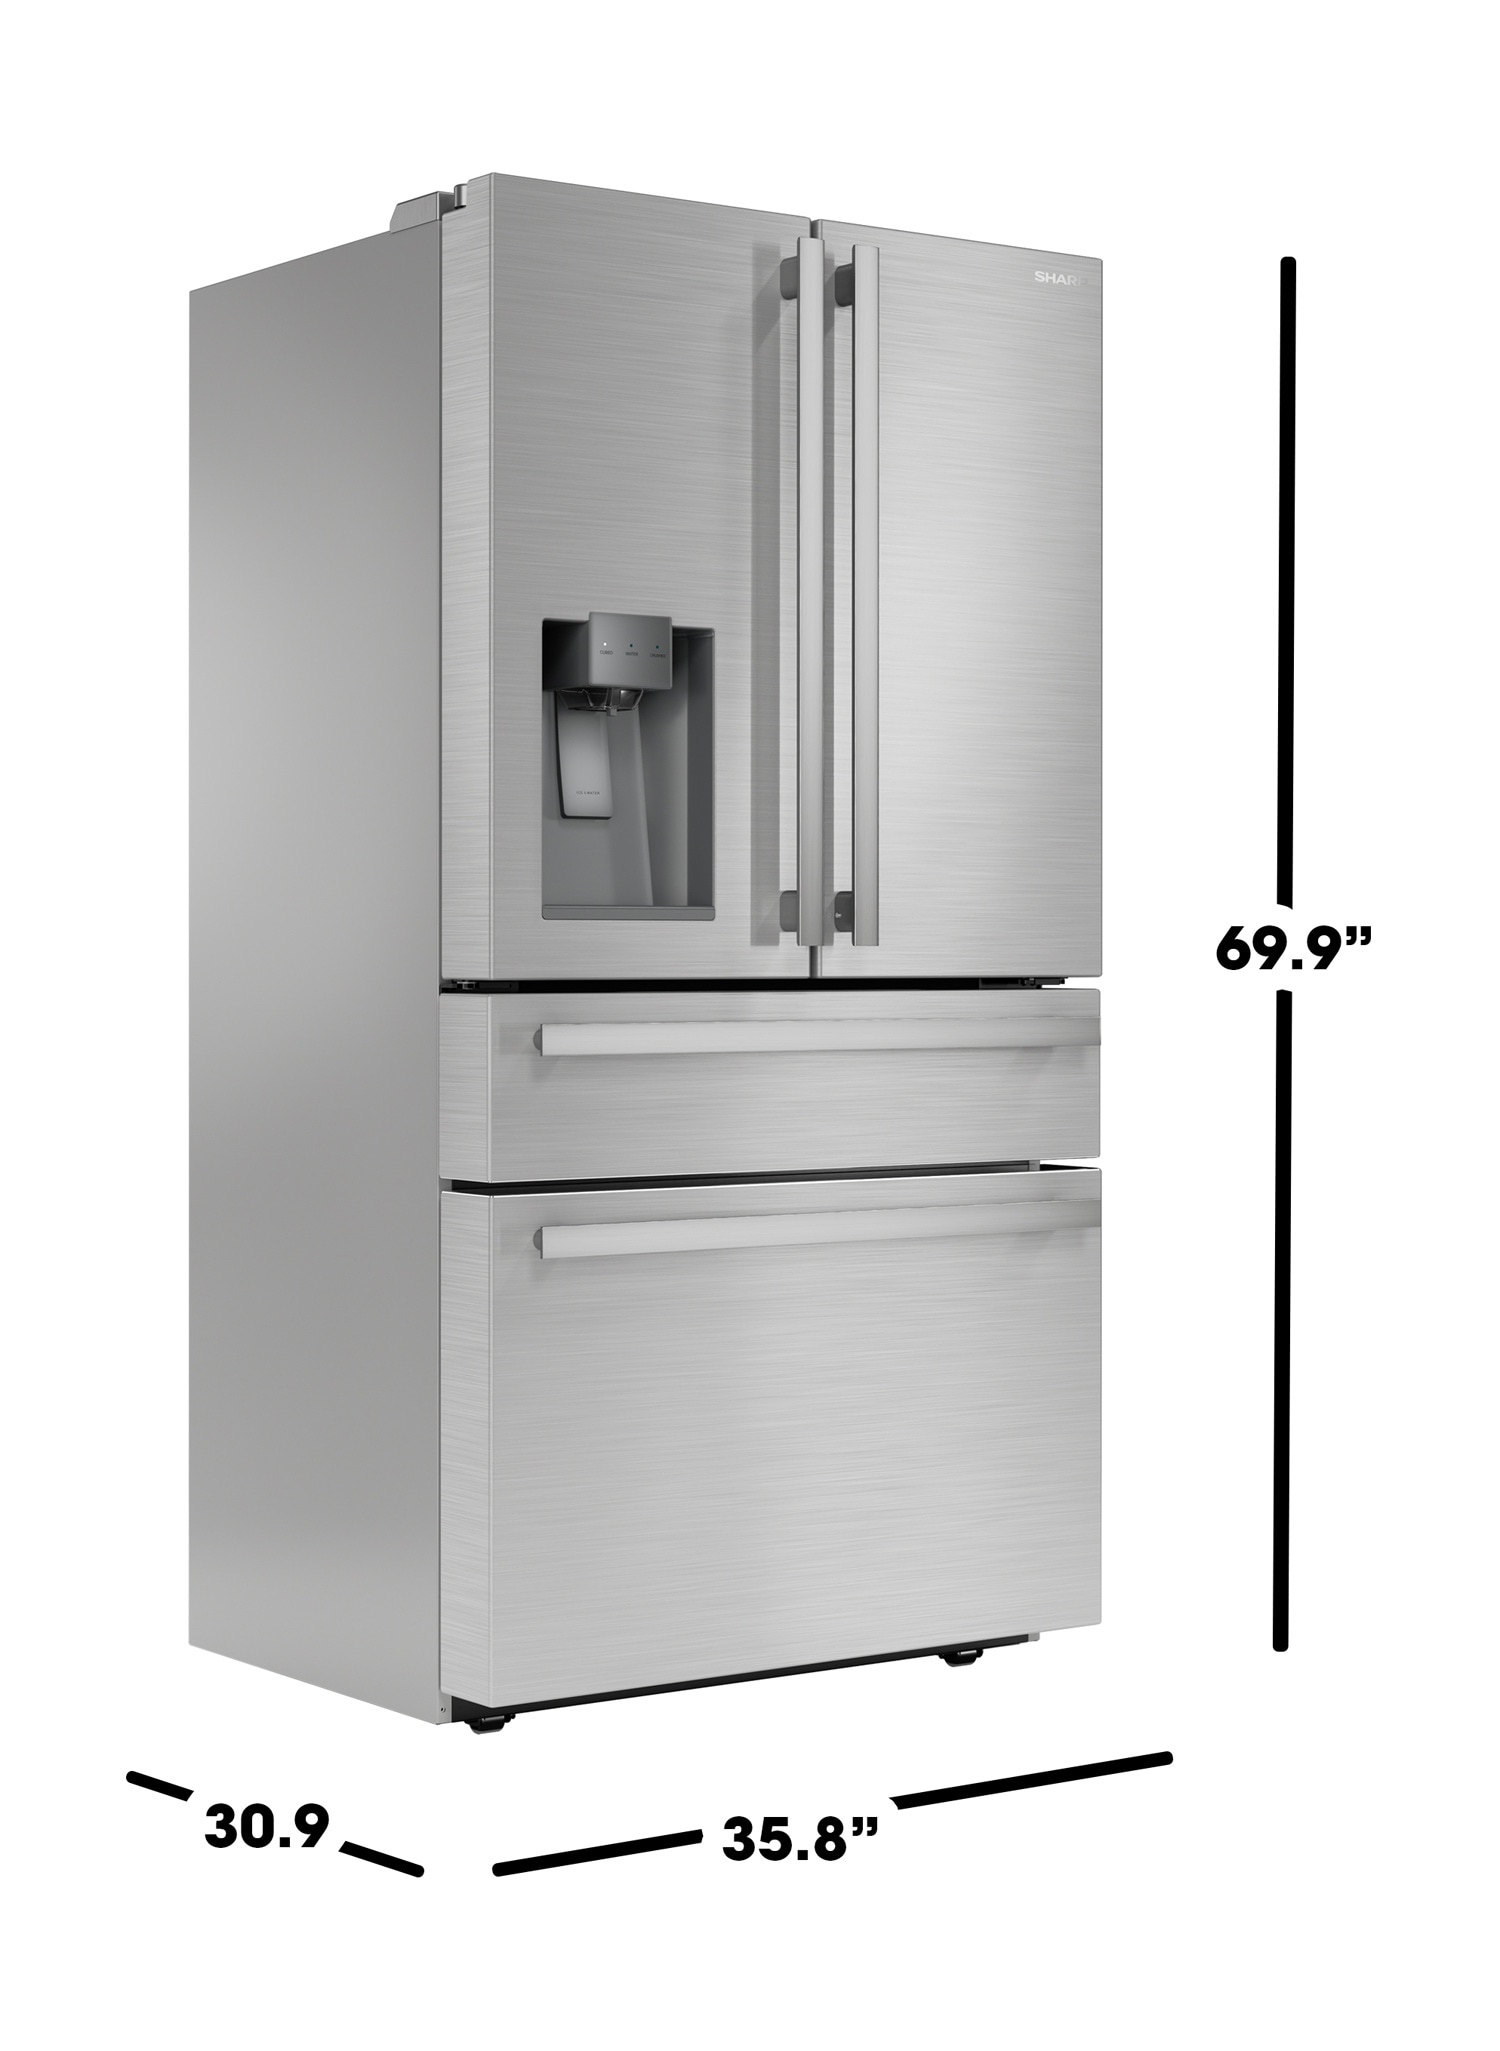 Sharp French Door Refrigerators at